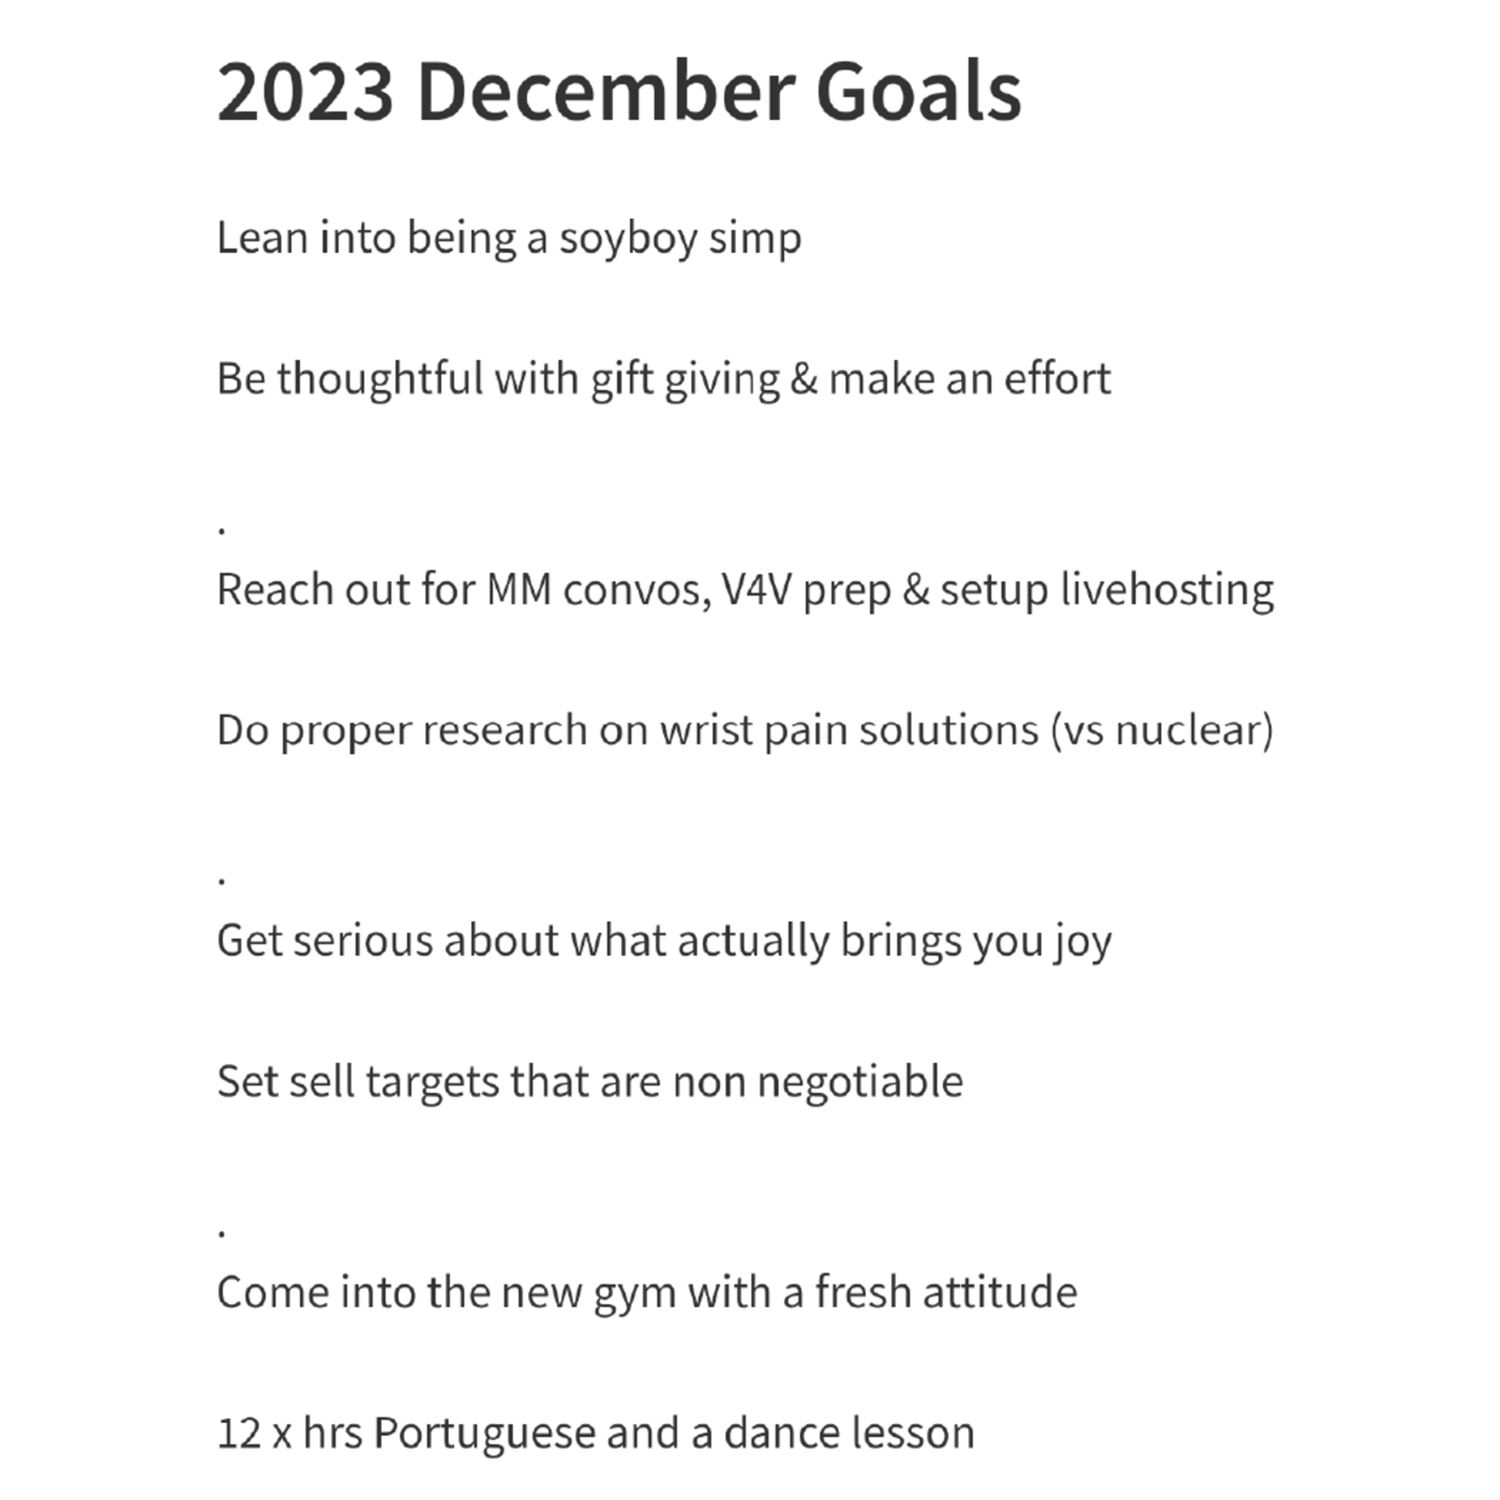 Kyrin's December 2023 goals